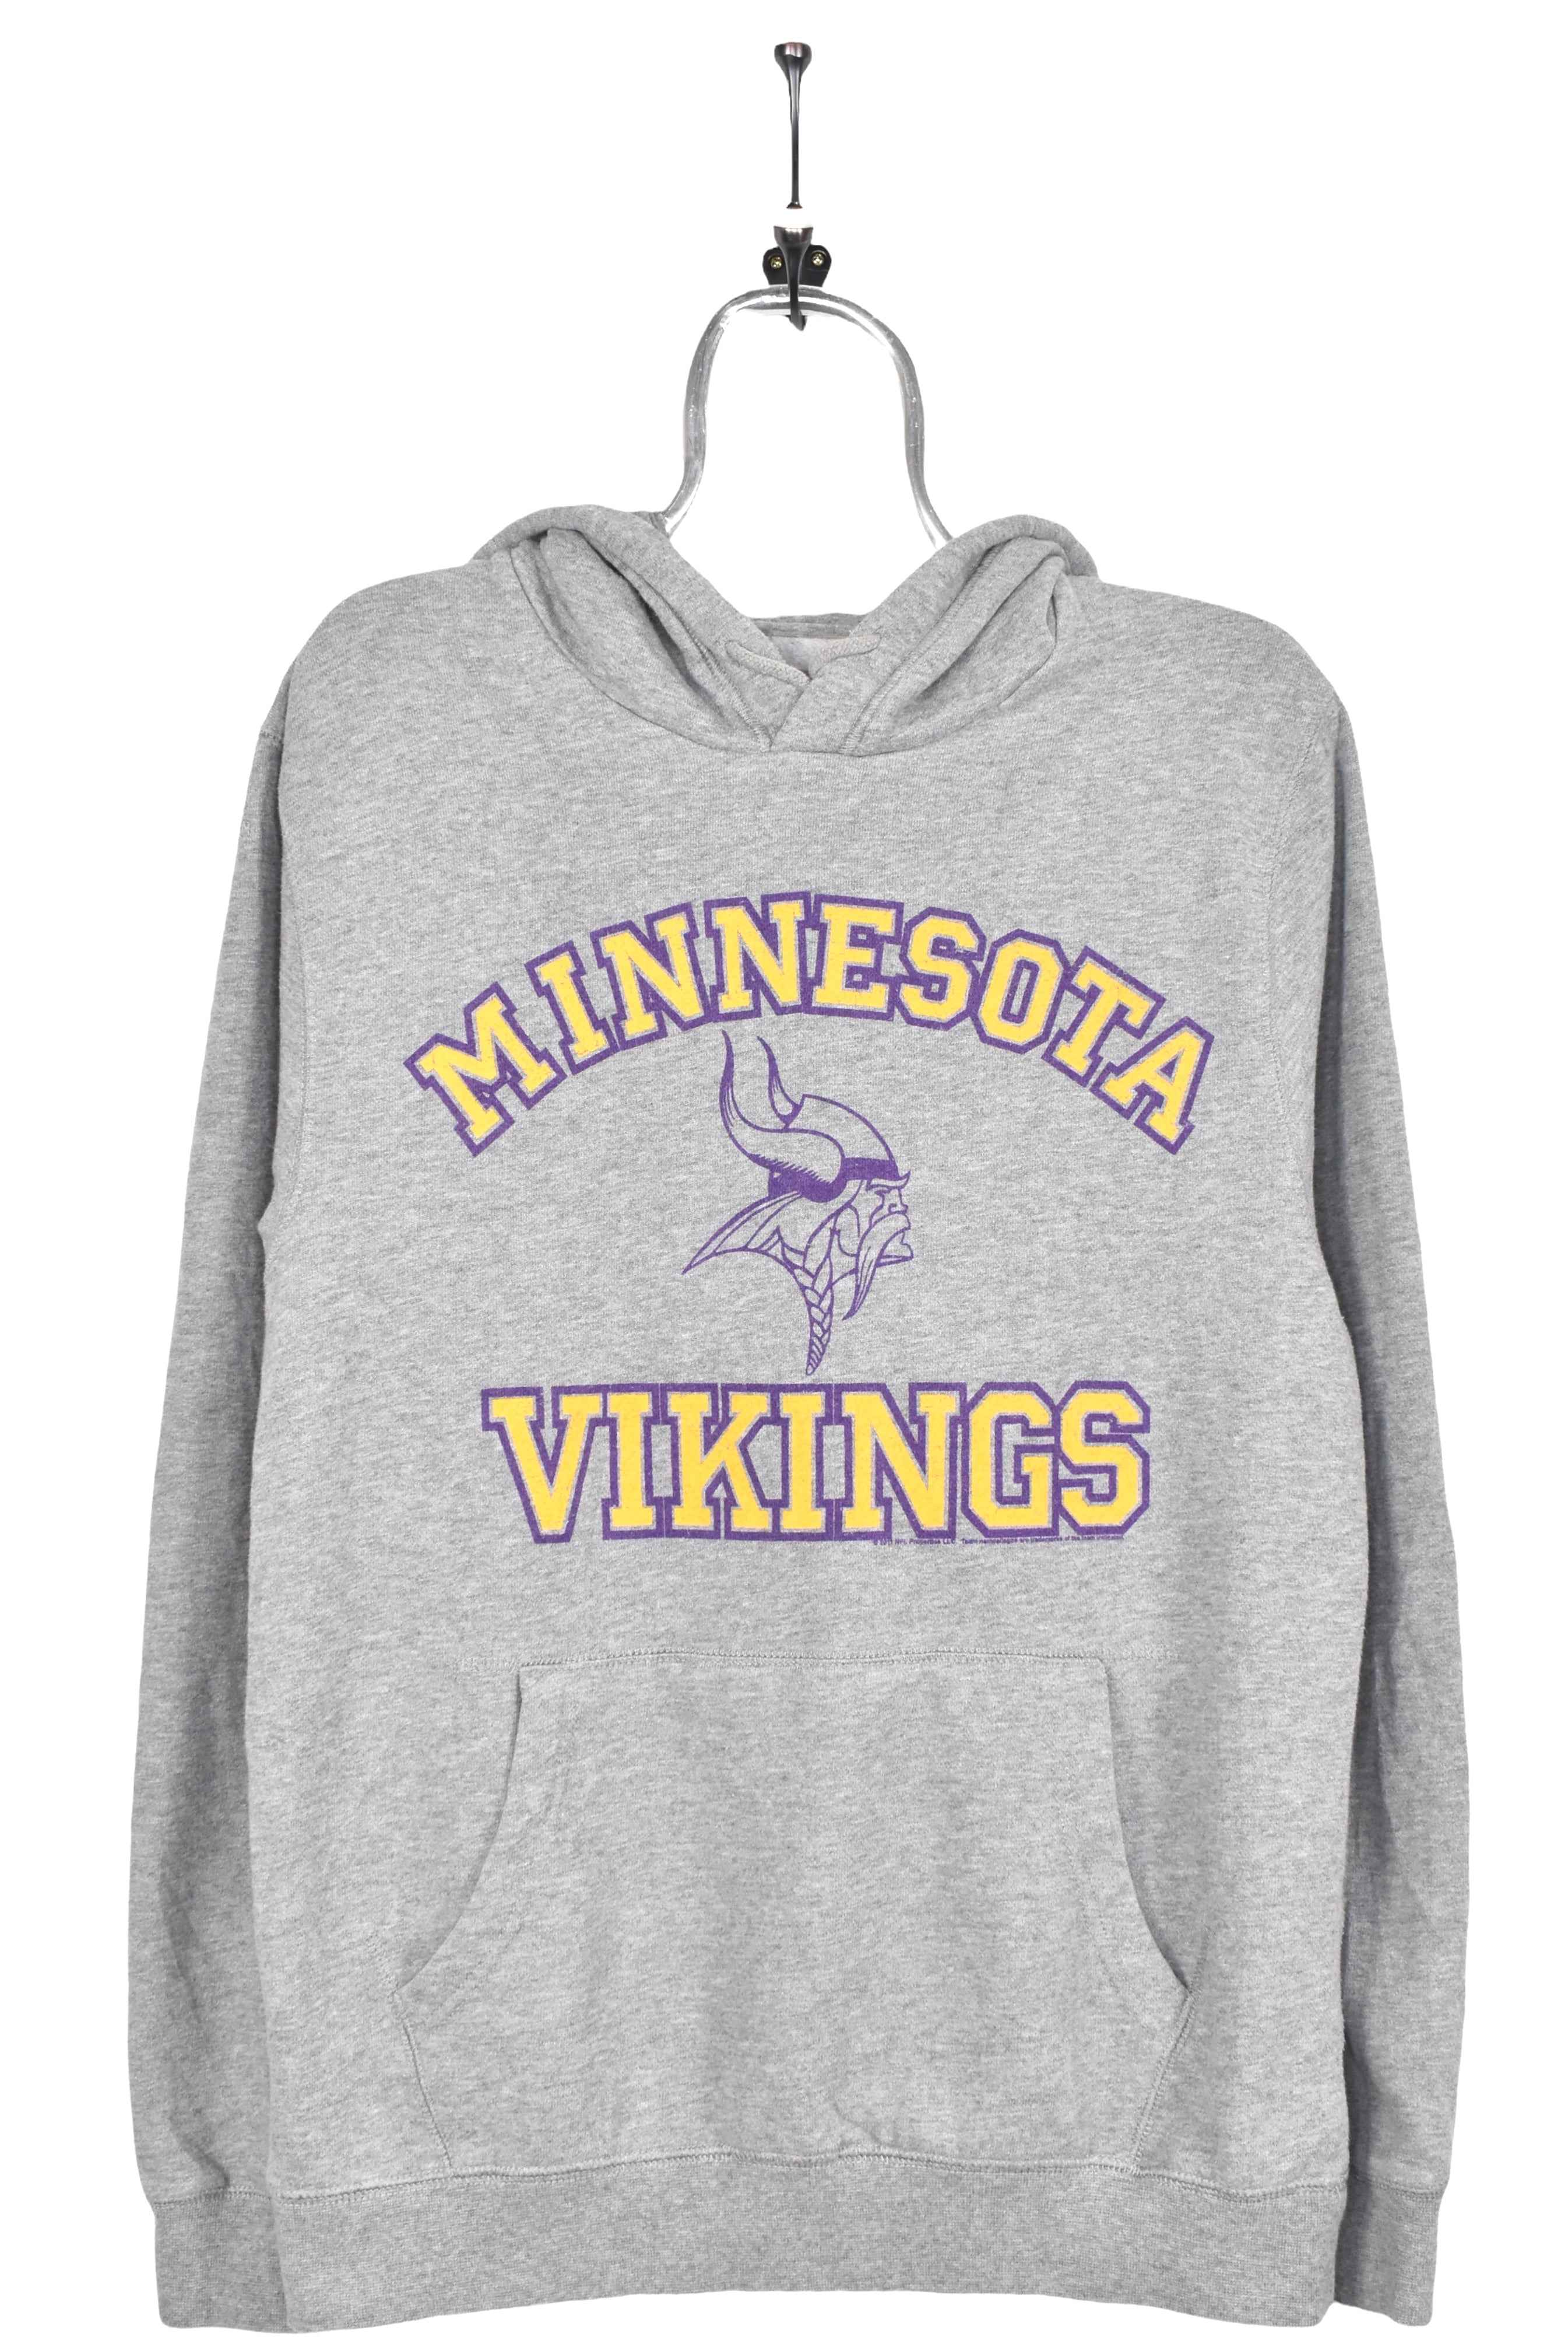 Vintage Minnesota Vikings hoodie, NFL grey graphic sweatshirt - AU Medium PRO SPORT